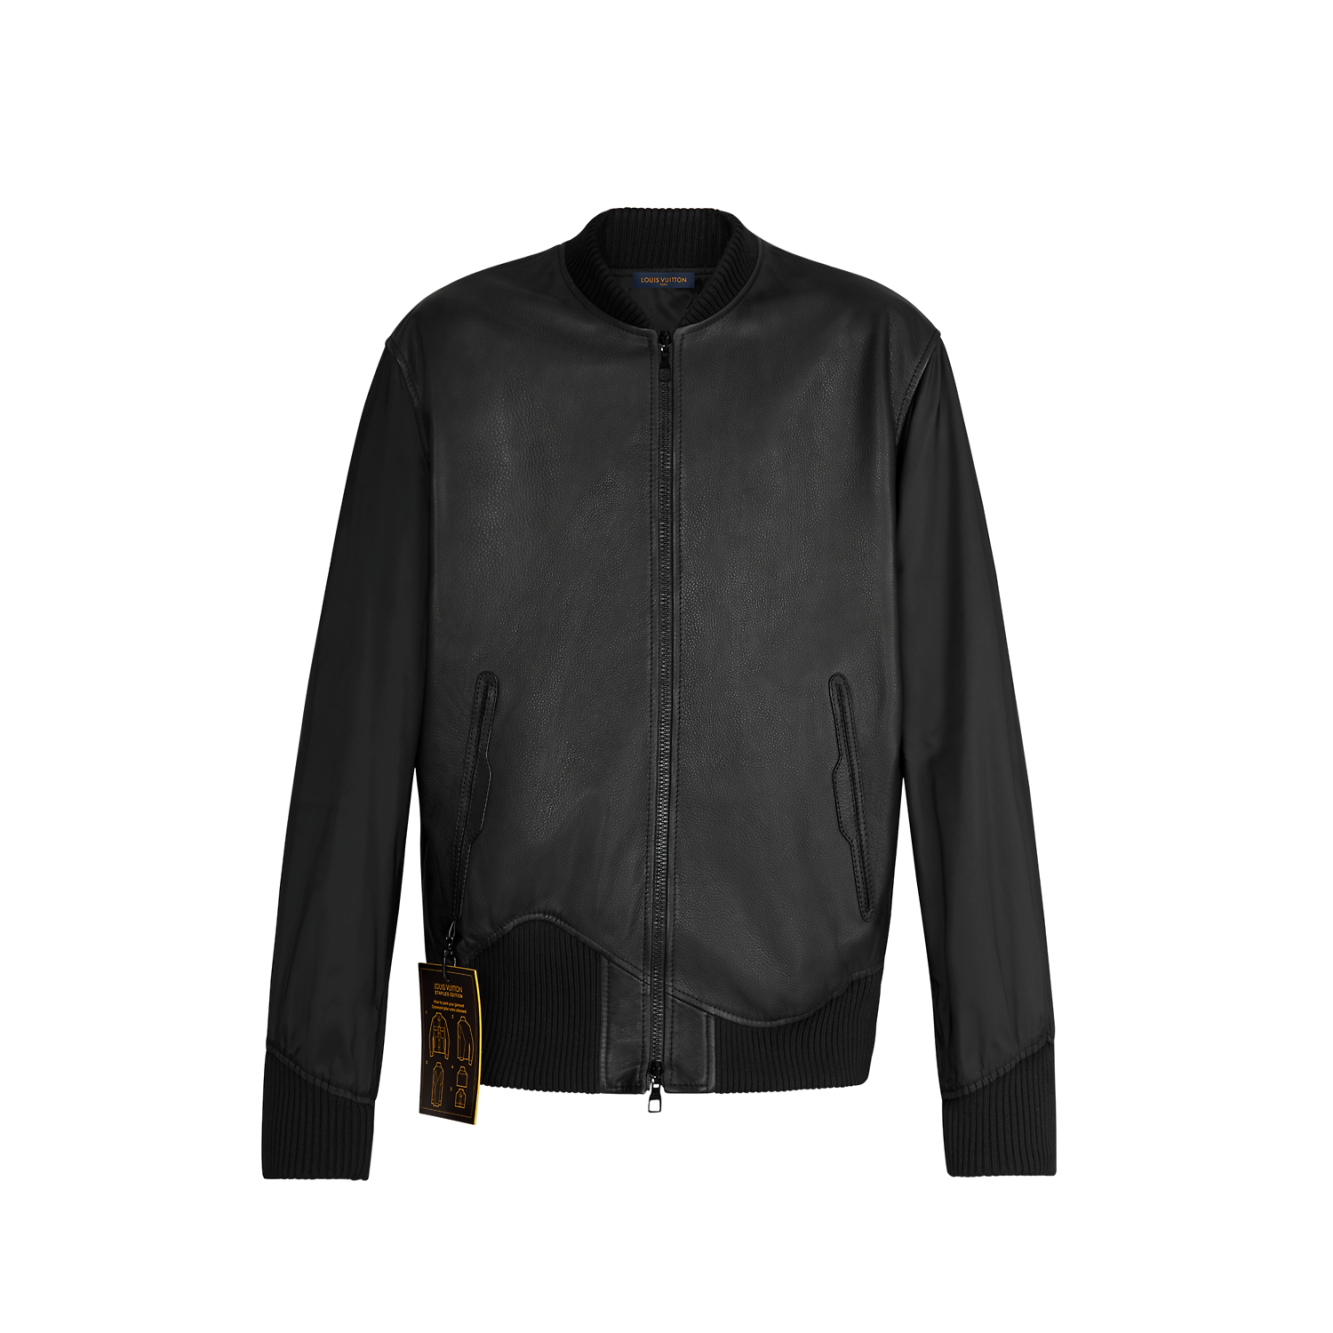 FIND] Louis Vuitton Reversible Monogram Windbreaker Jacket : r